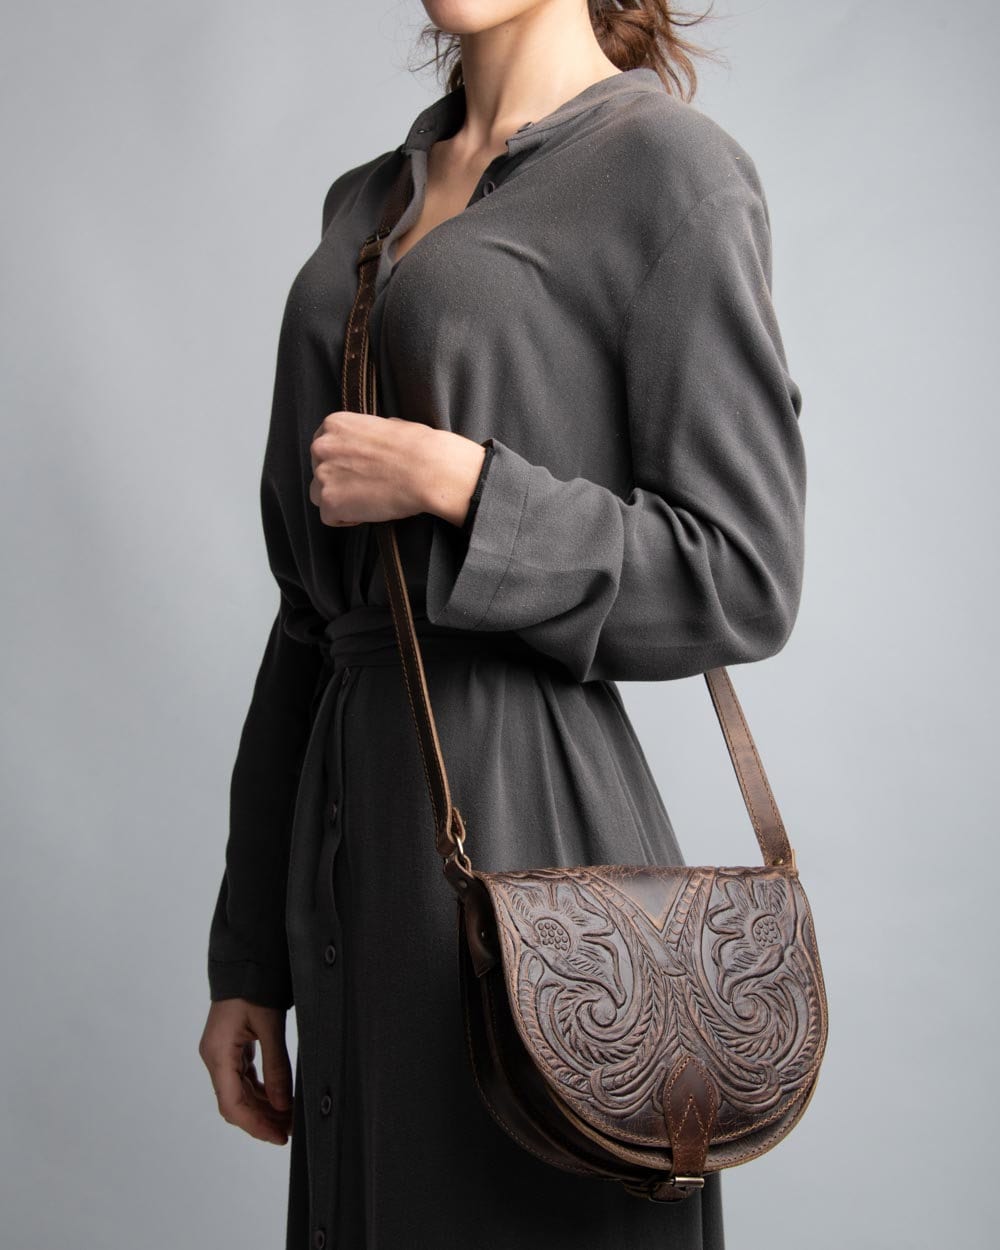 Leather crossbody bag for women, rustic saddle leather bag, tooled leather purse, umhängetasche, sac en cuir